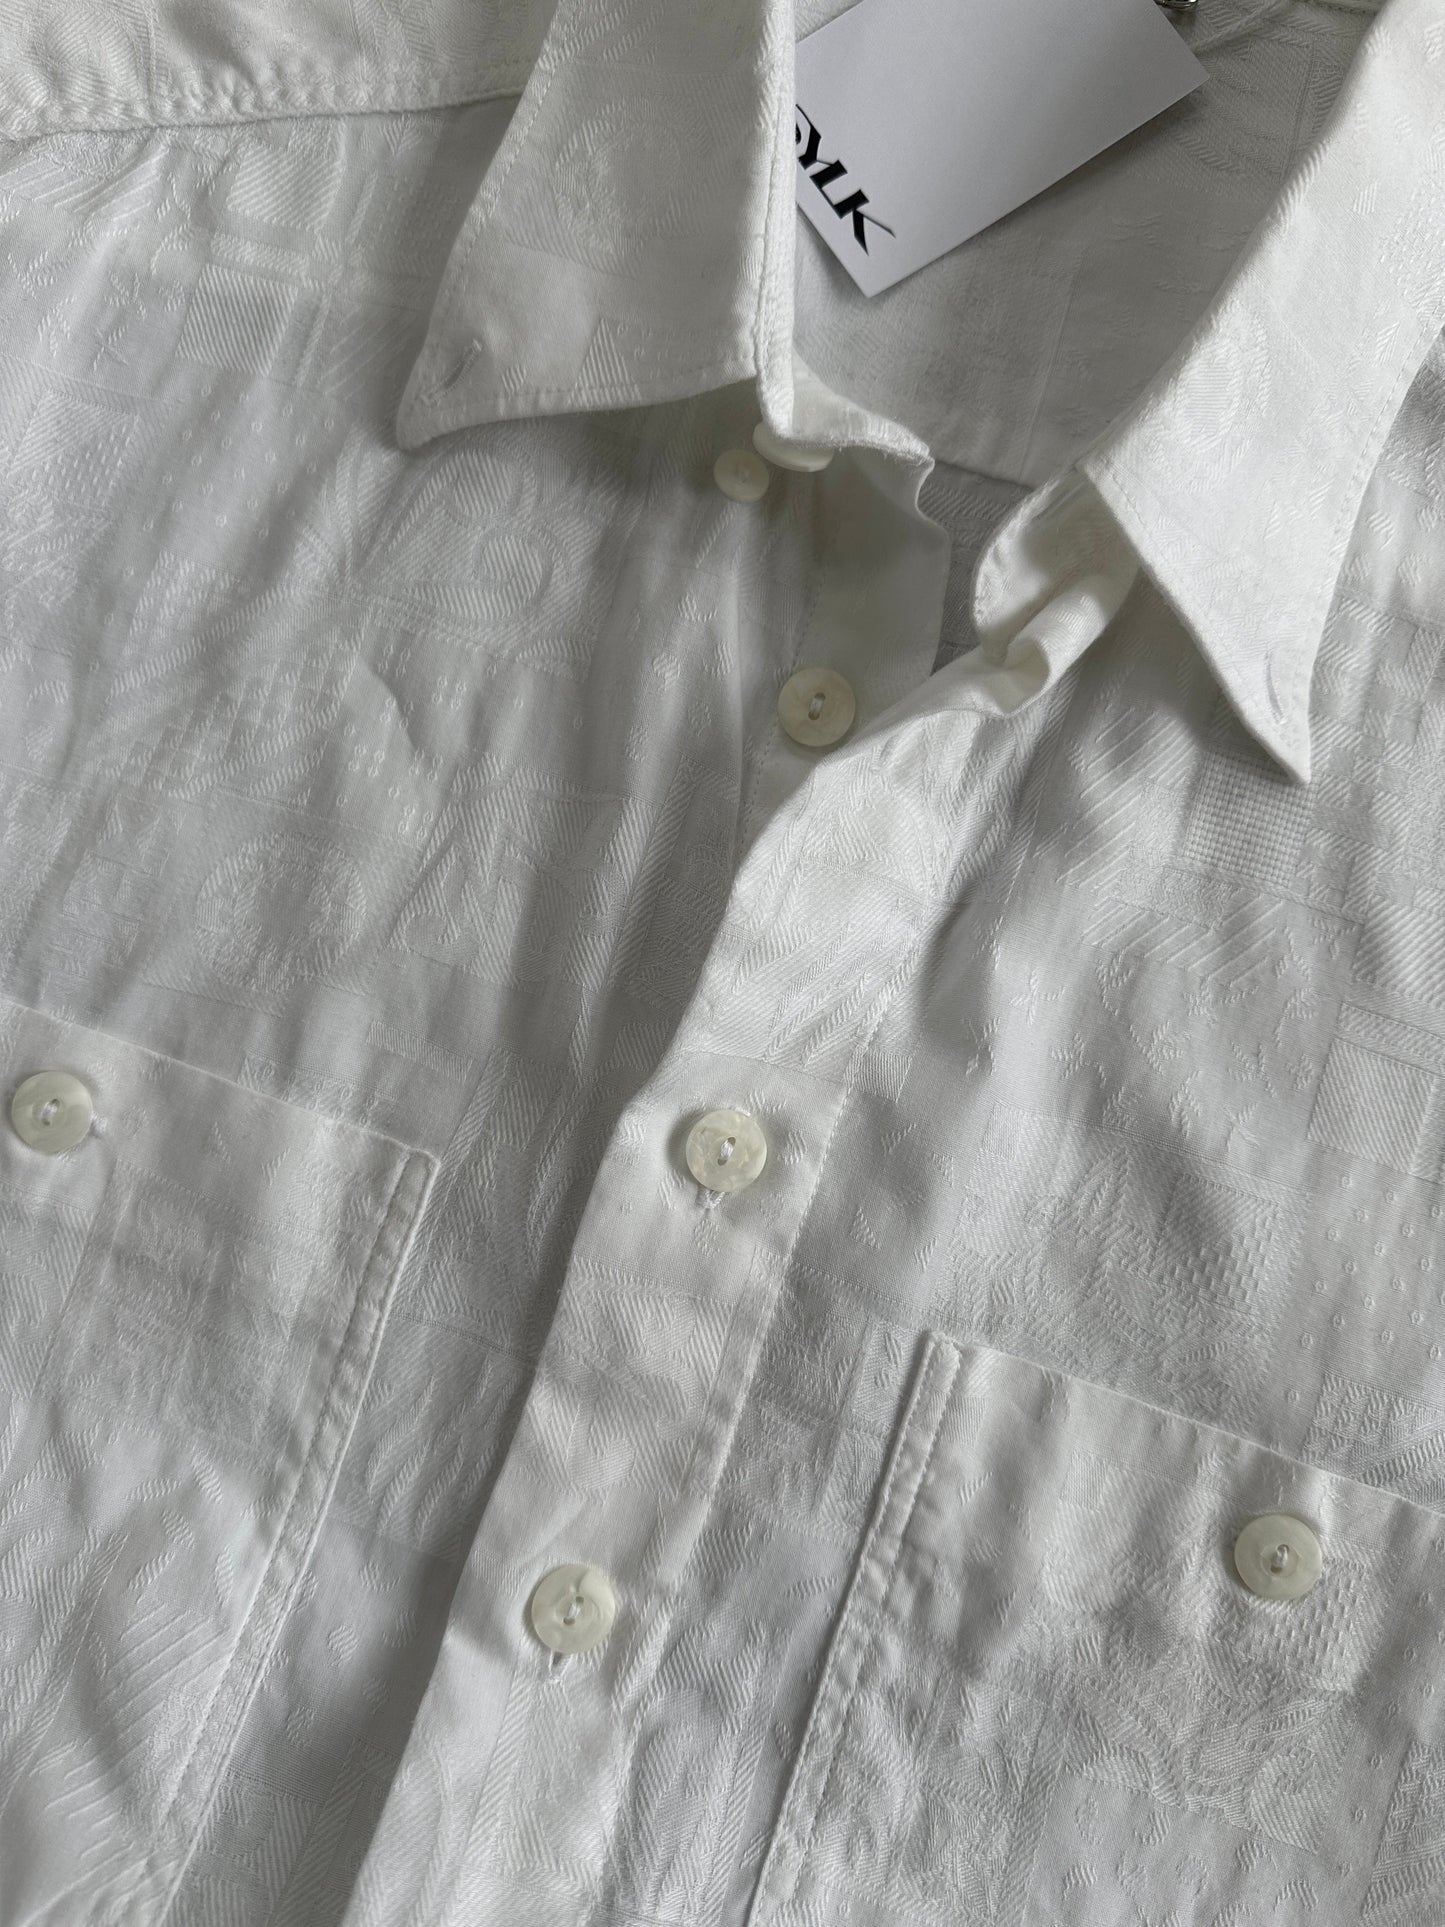 Vintage Embroidery Cotton Shirt - XL